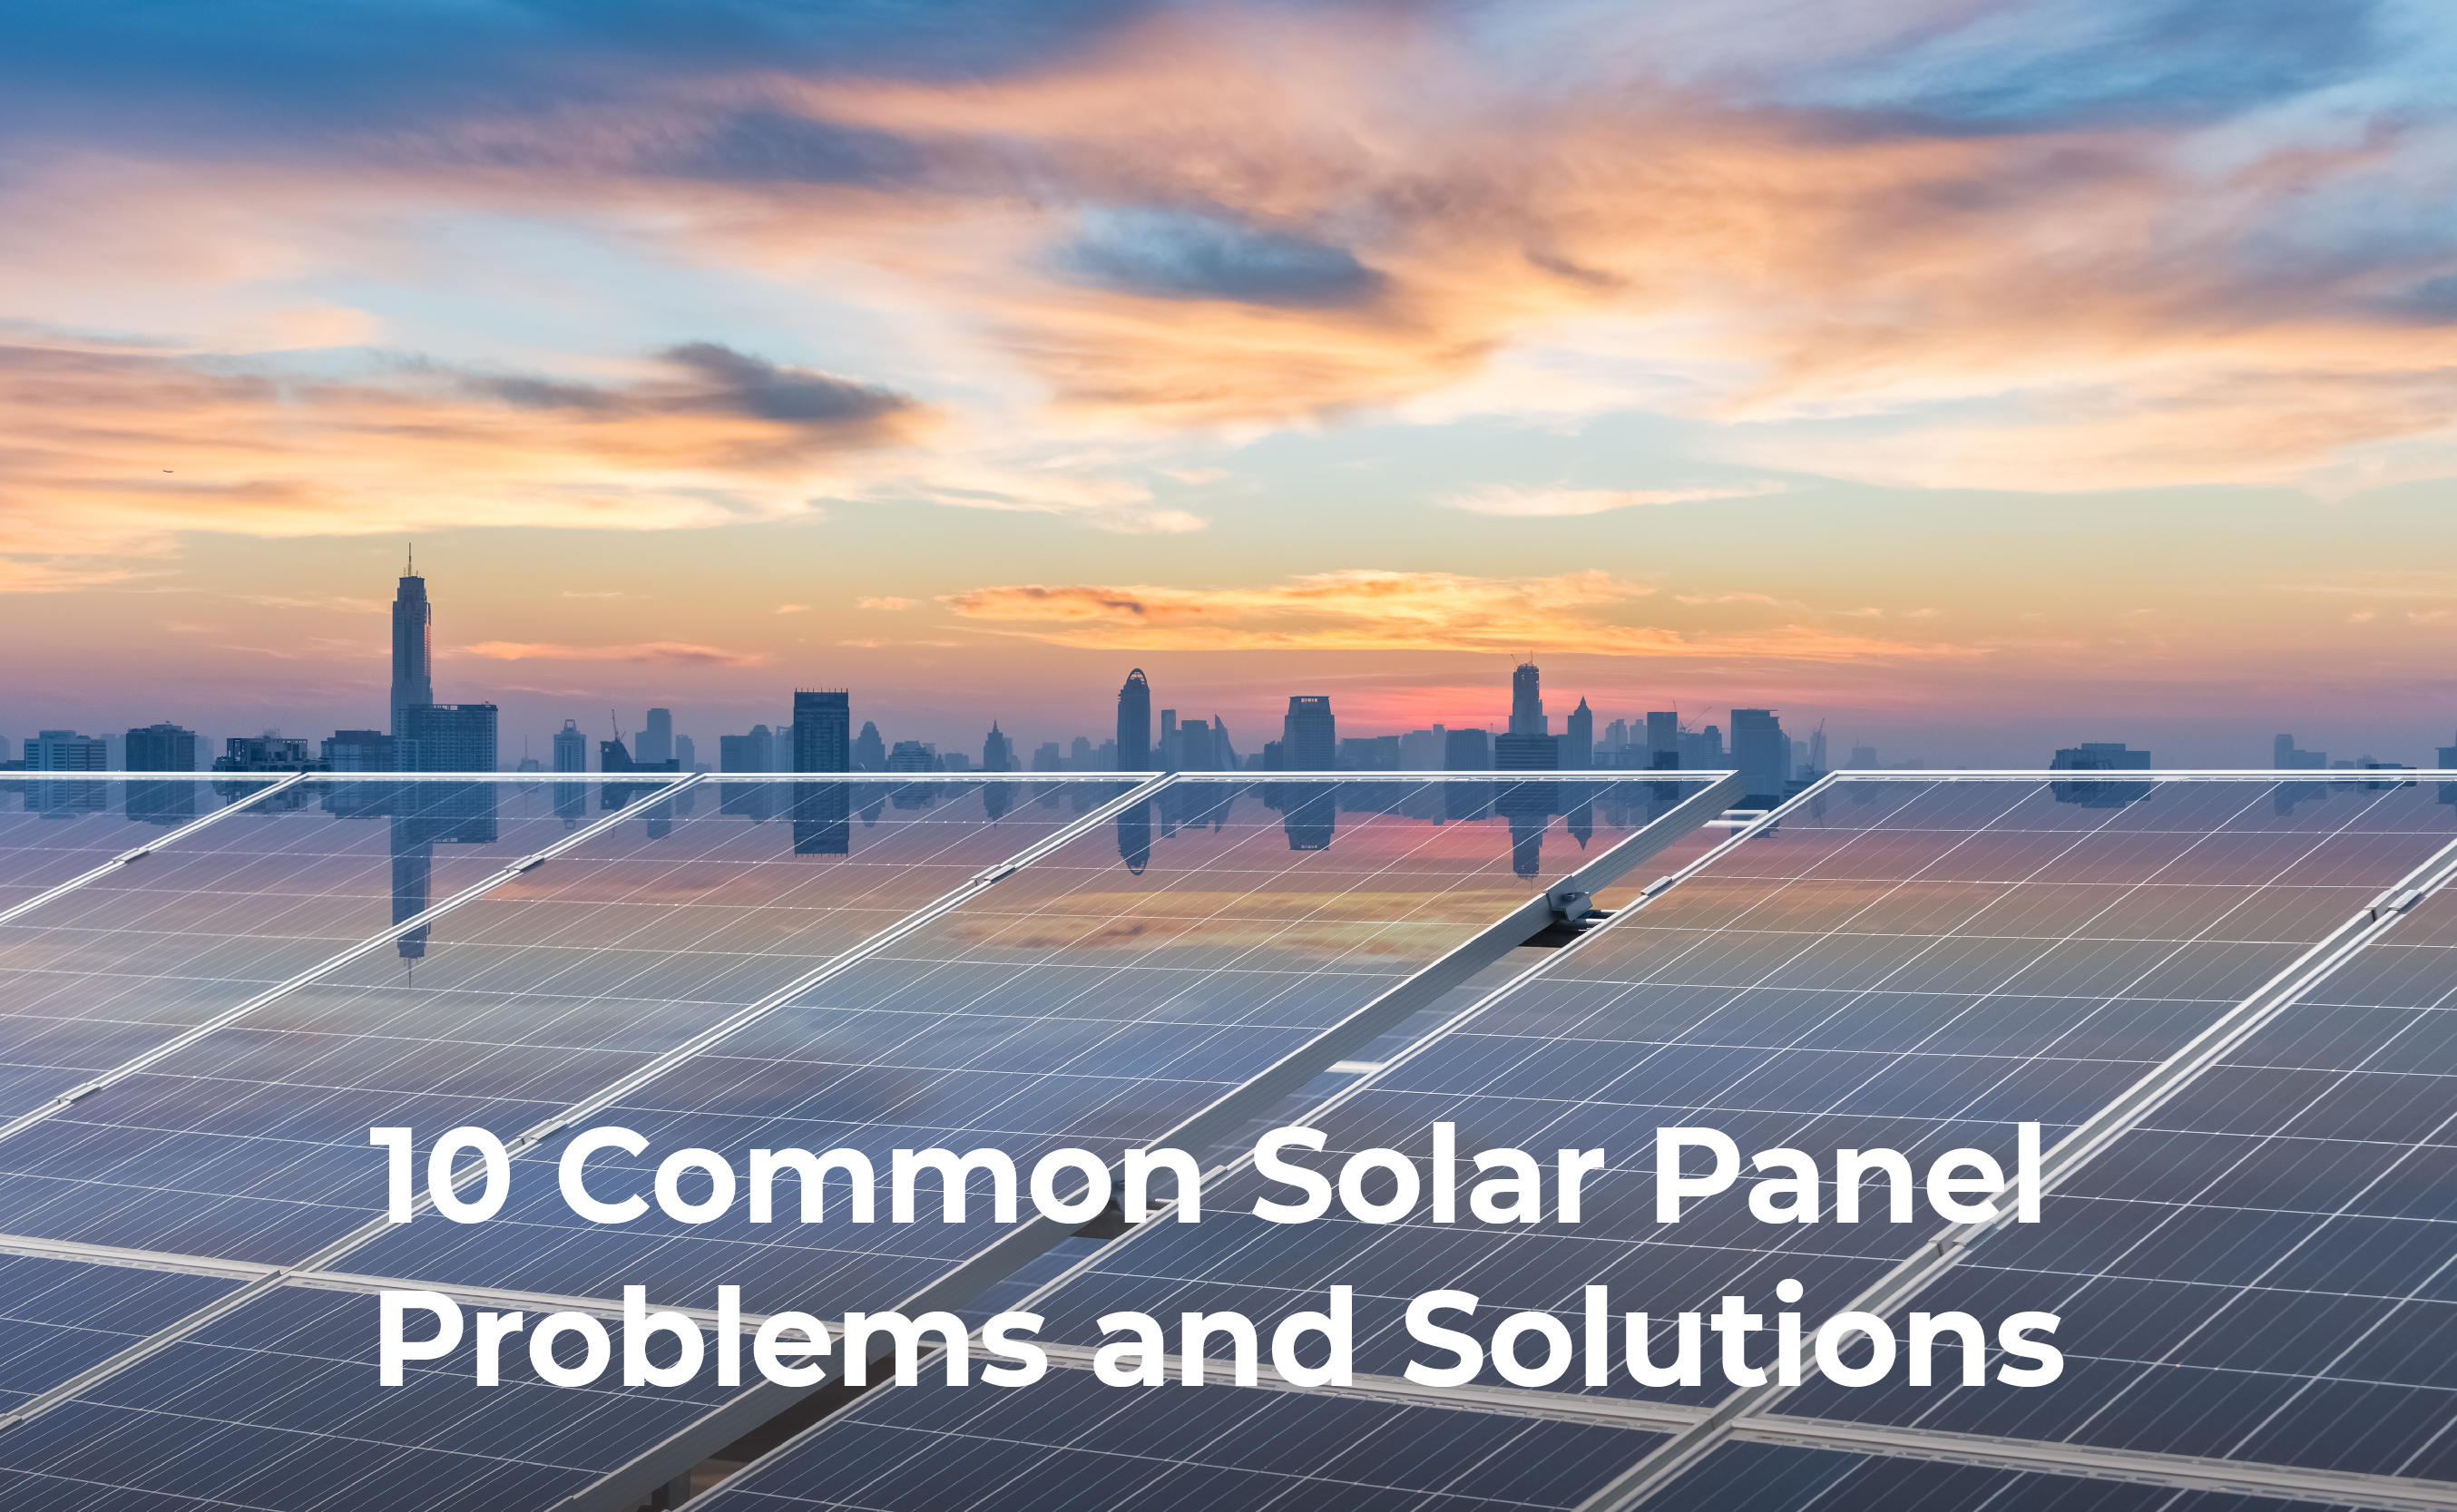 Common Solar Panel Problems